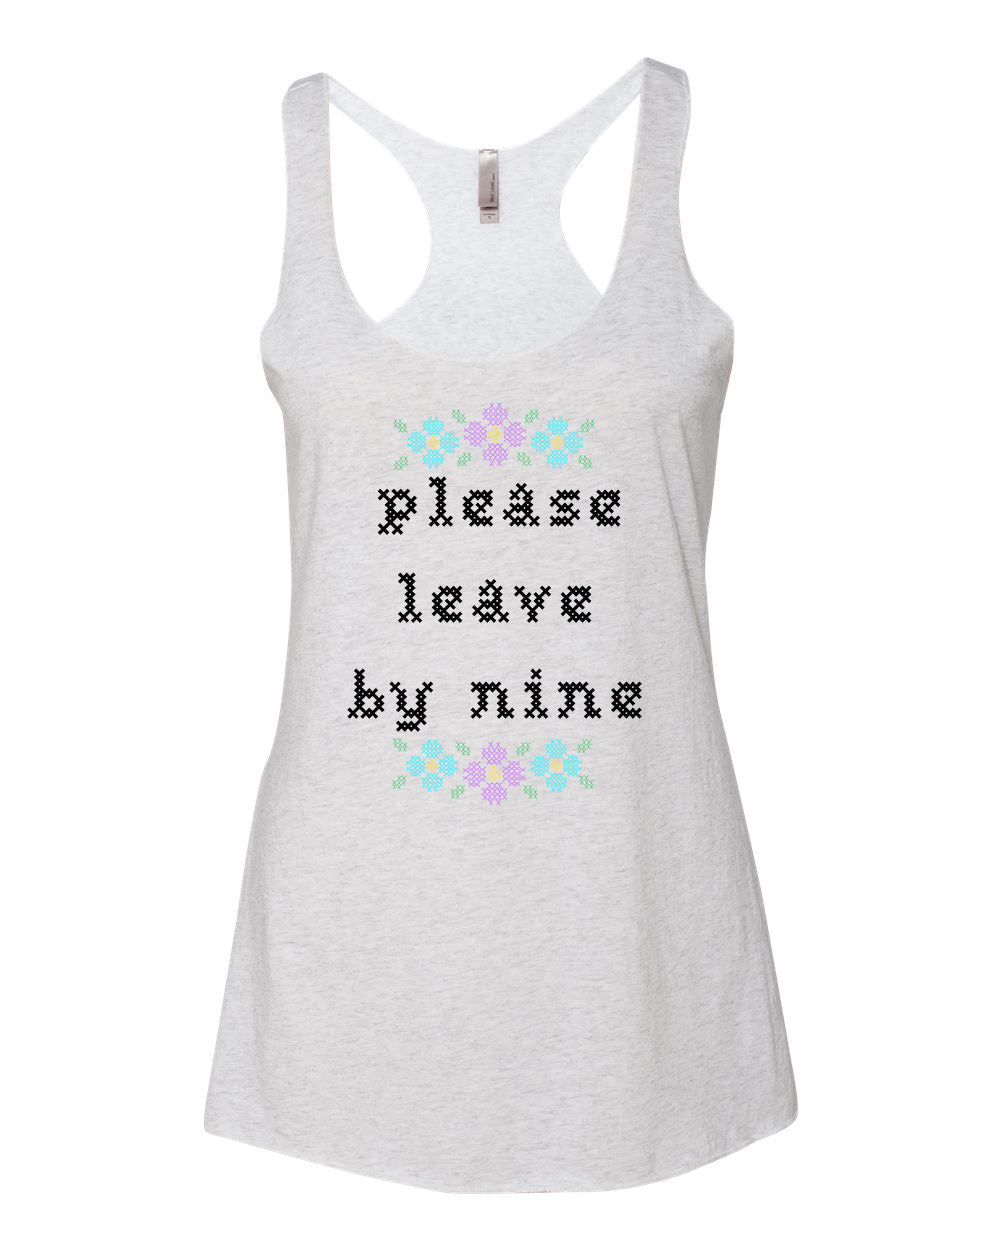 Please Leave By Nine - Cross Stitch Design - Women's Tank - White